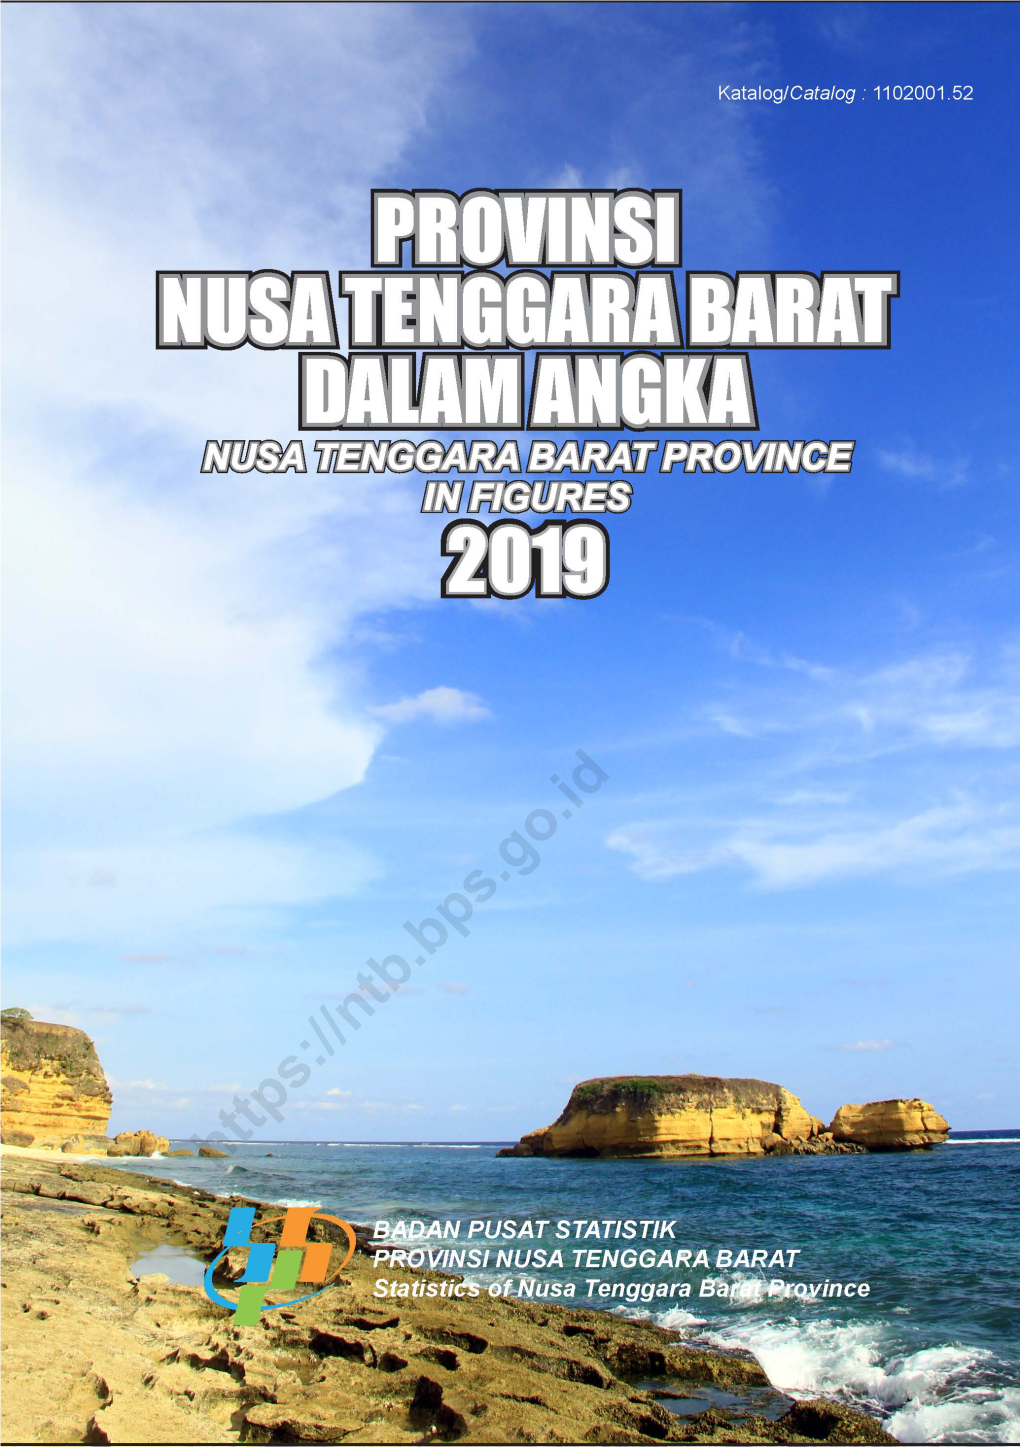 Sumbawa Provinsi Nusa Tenggara Barat, 2018 Average Temperature and Humidity in Sumbawa Nusa Tenggara Barat Province, 2018